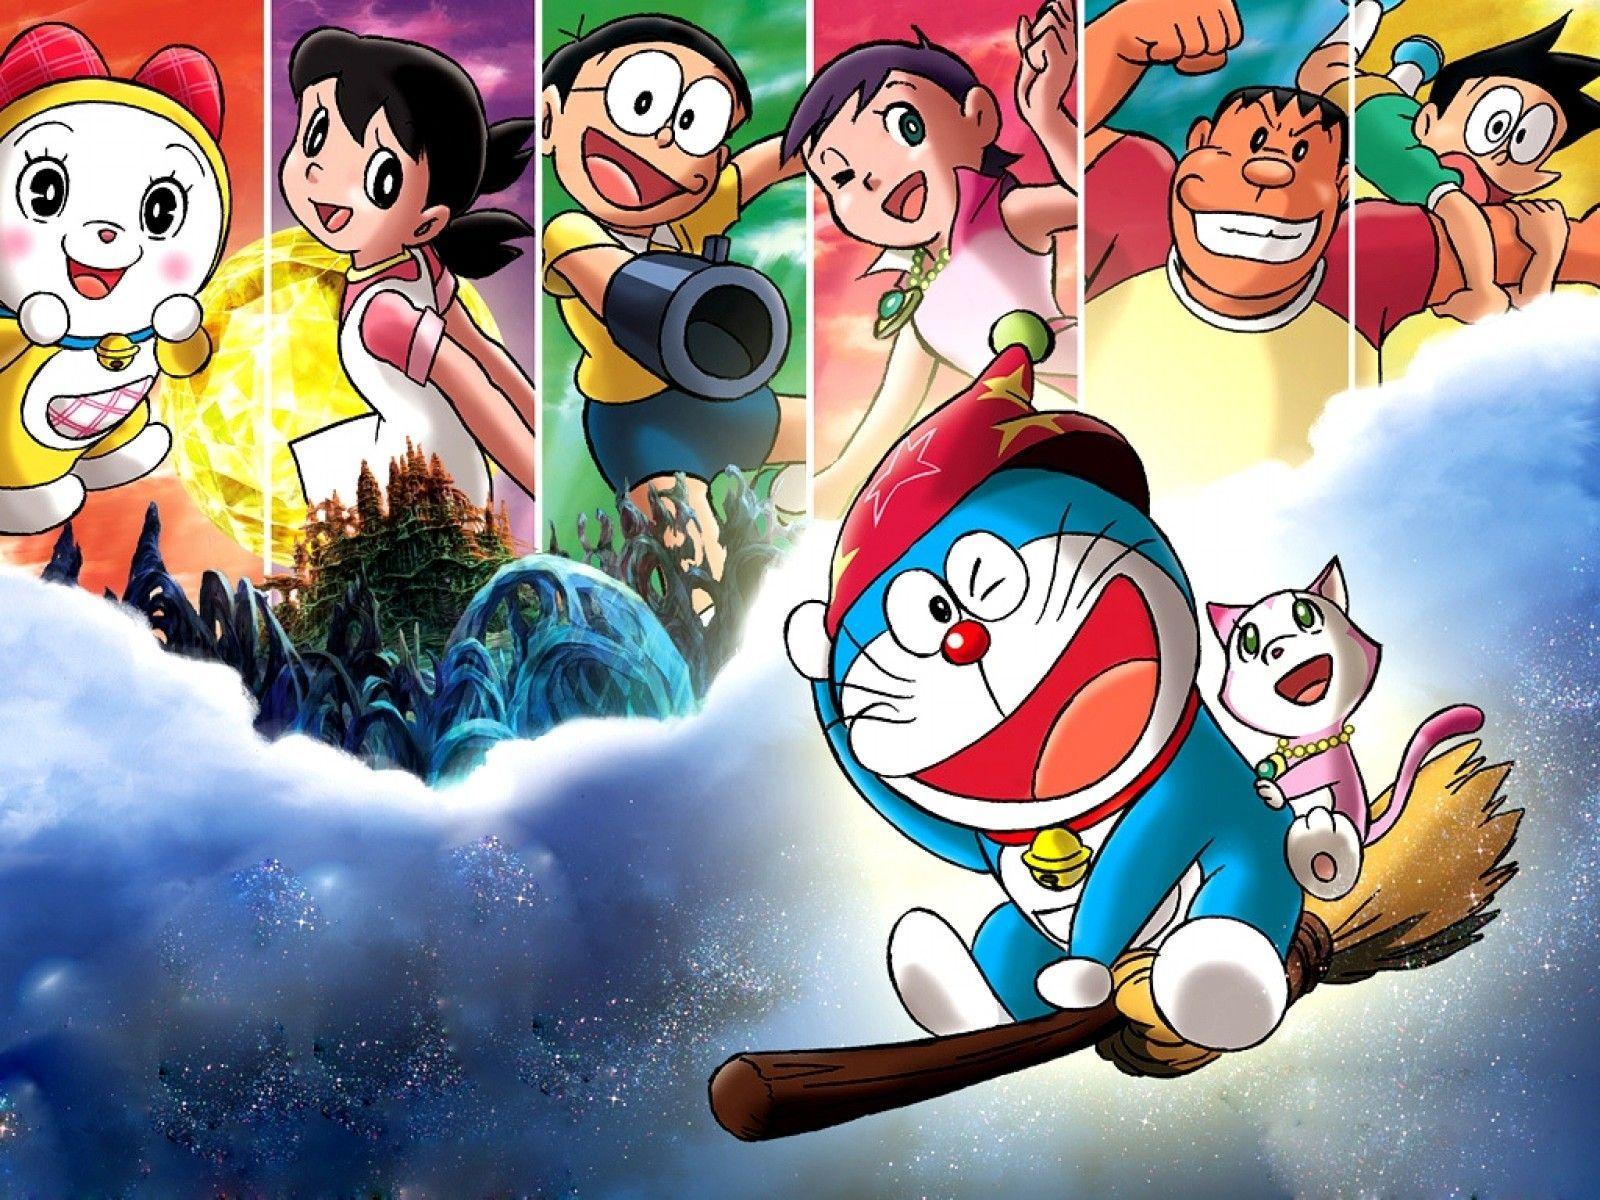 Doraemon Wallpaper. Doraemon. Doraemon wallpaper, Doraemon, Doraemon cartoon